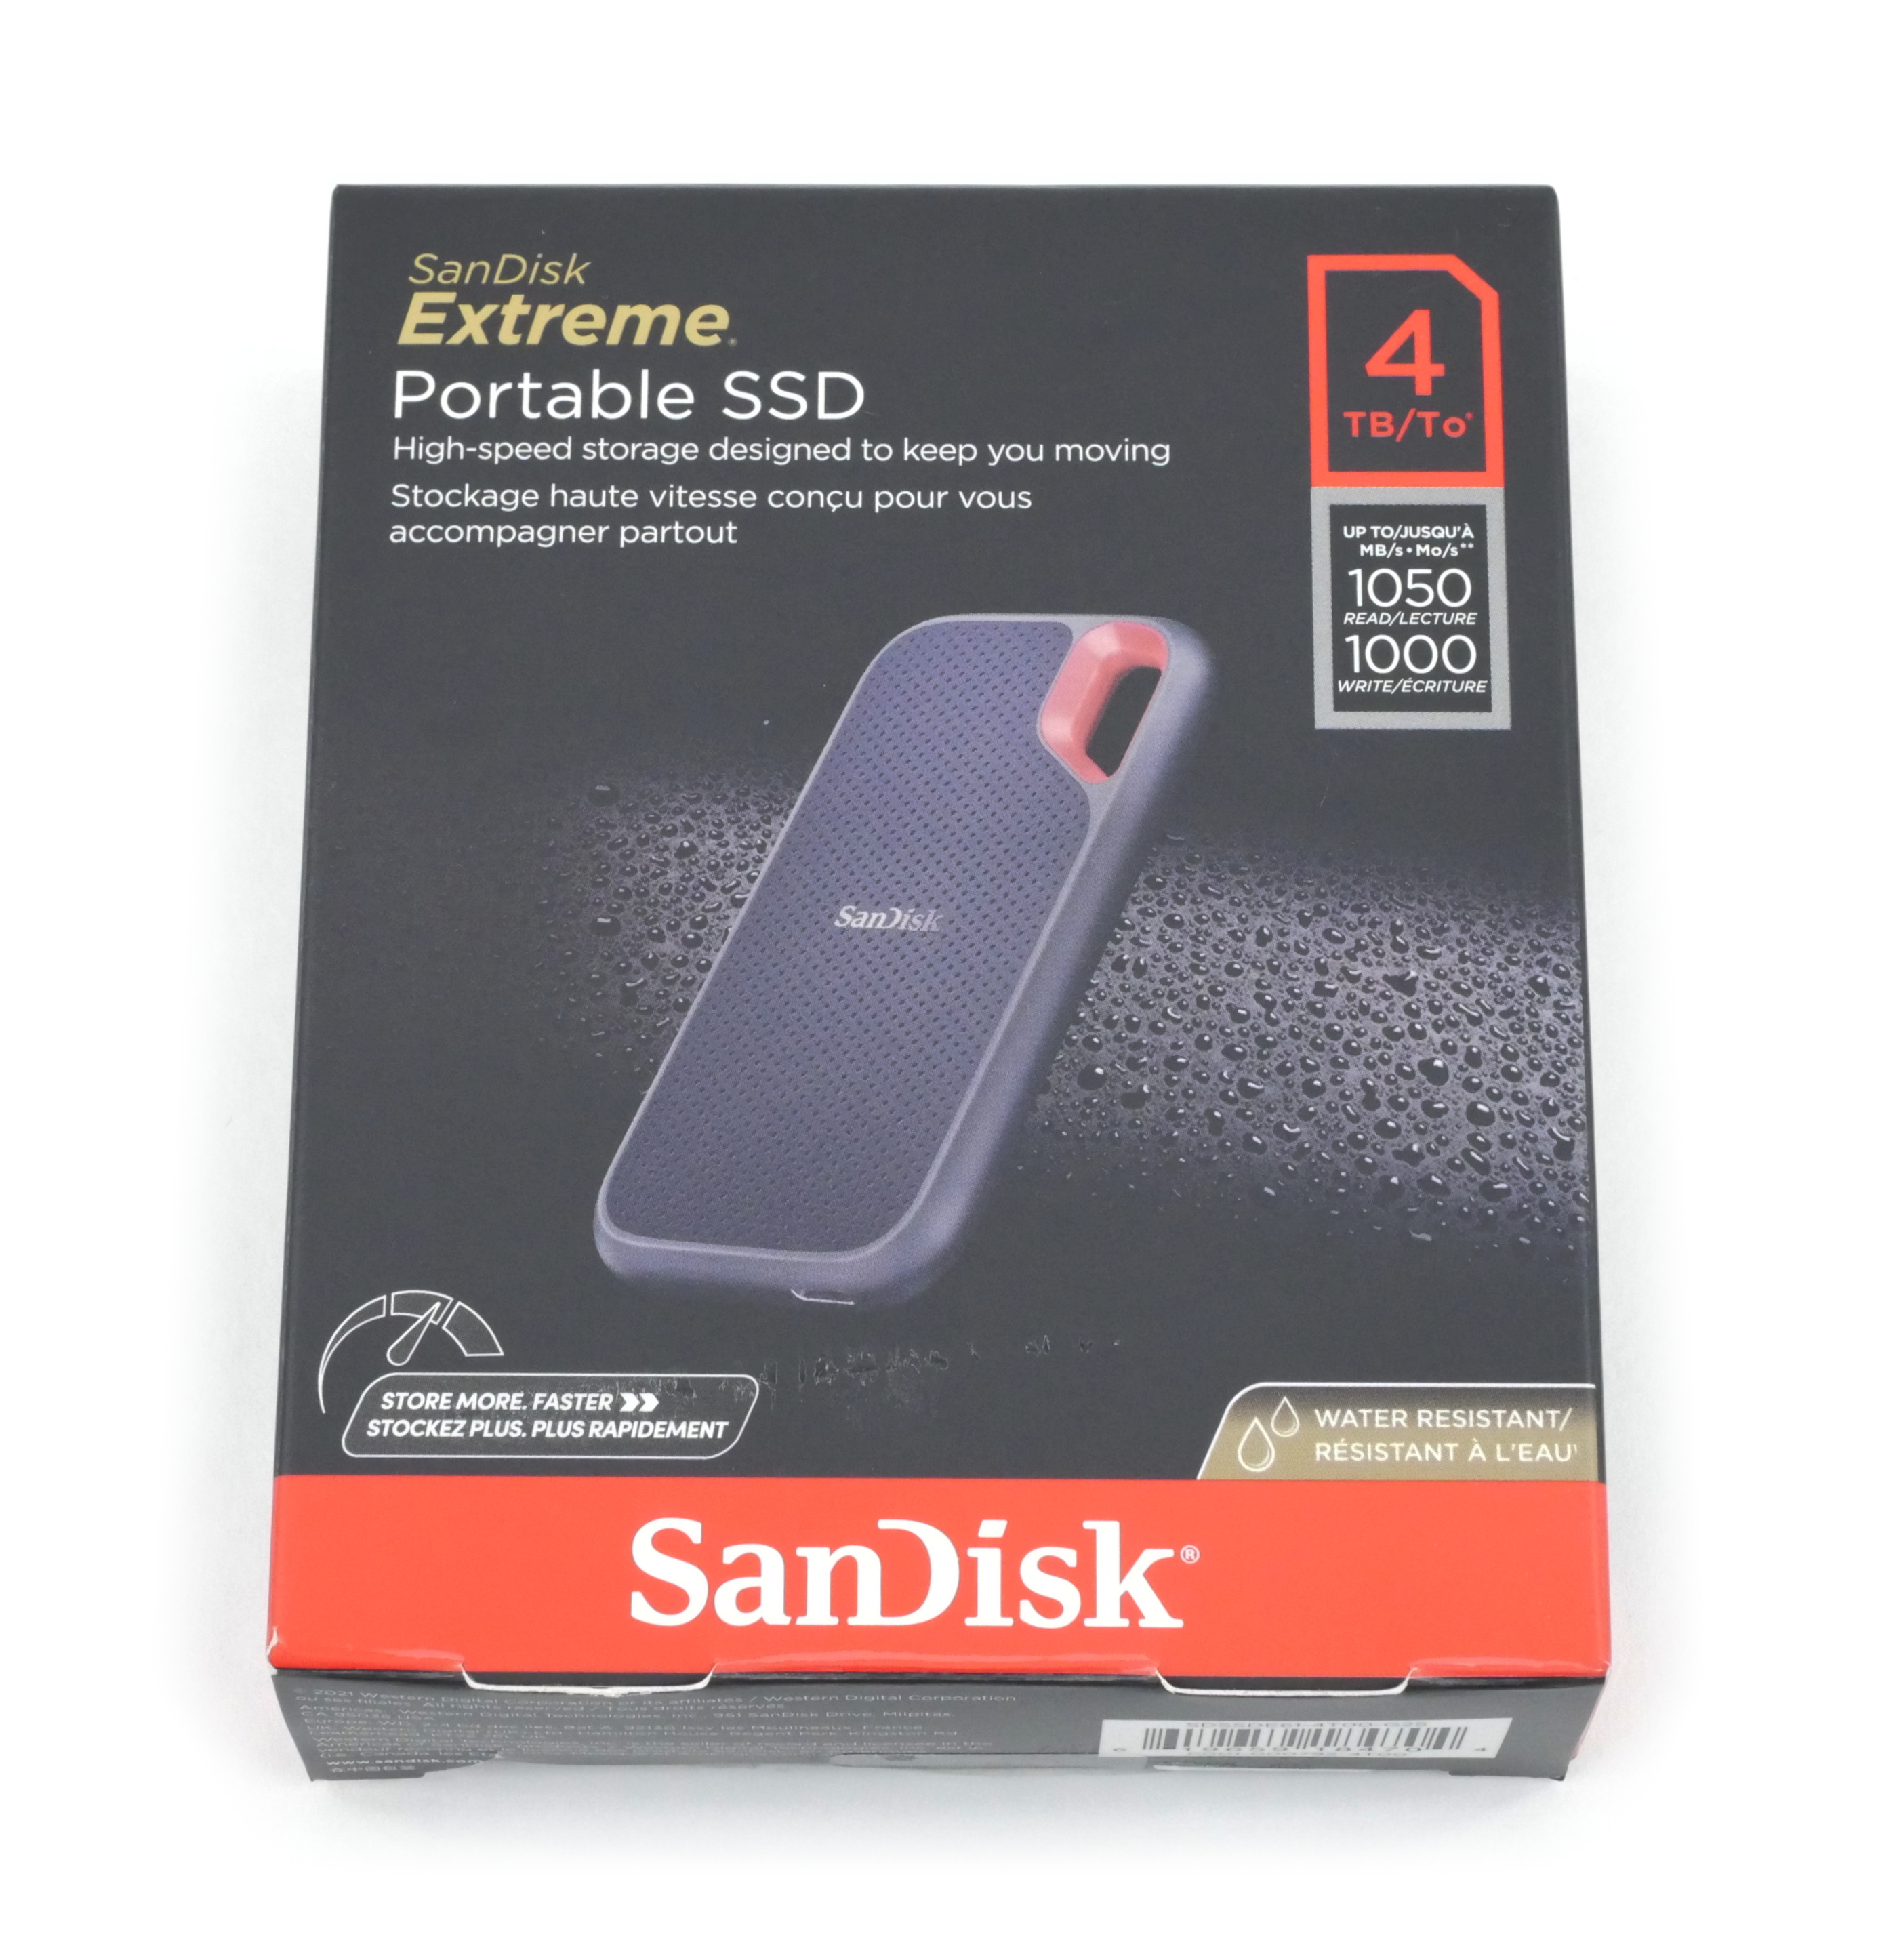 16 To 14 To 12 To 10 To 8 To 6 To 4 To 2 To 1 To 500 Go Disque SSD mobile  haute vitesse portable